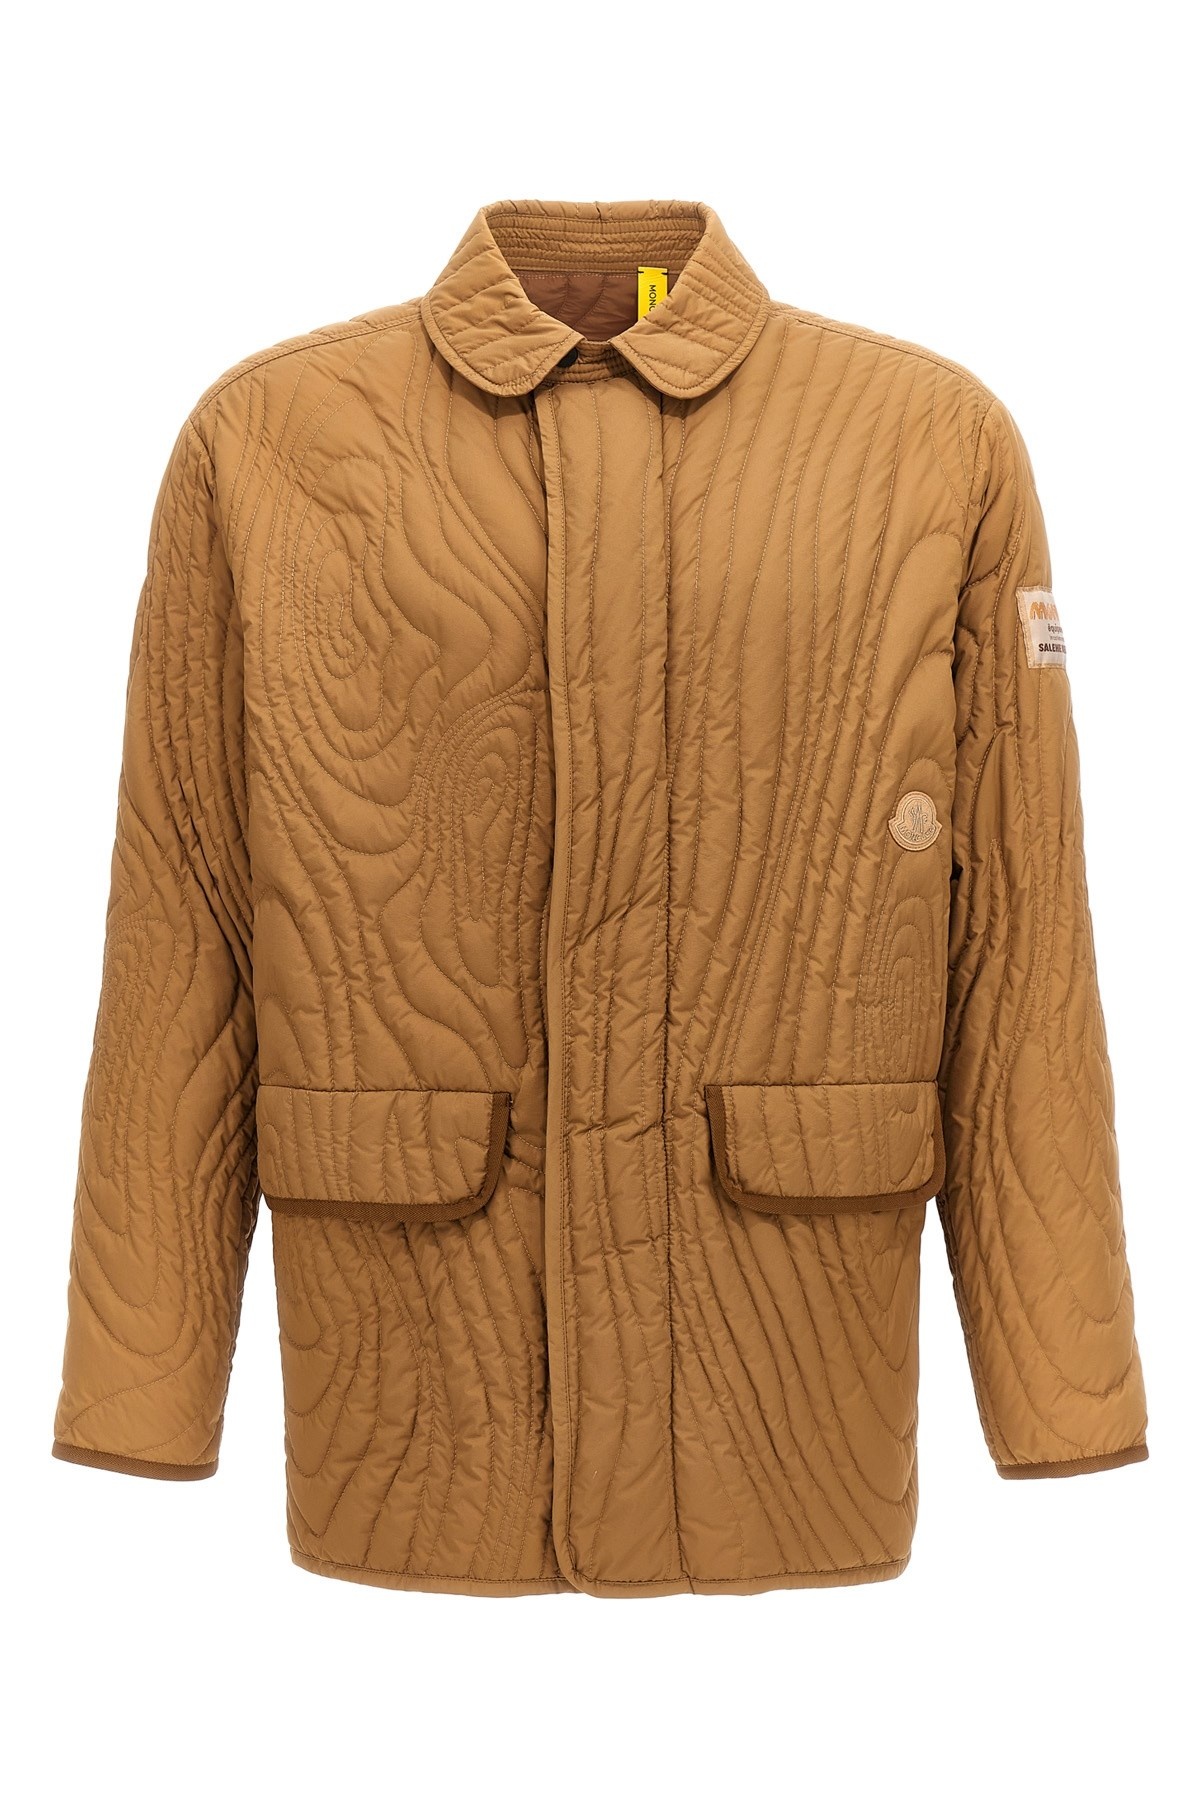 Moncler Genius x Salehe Bembury 'Harter' jacket - 1